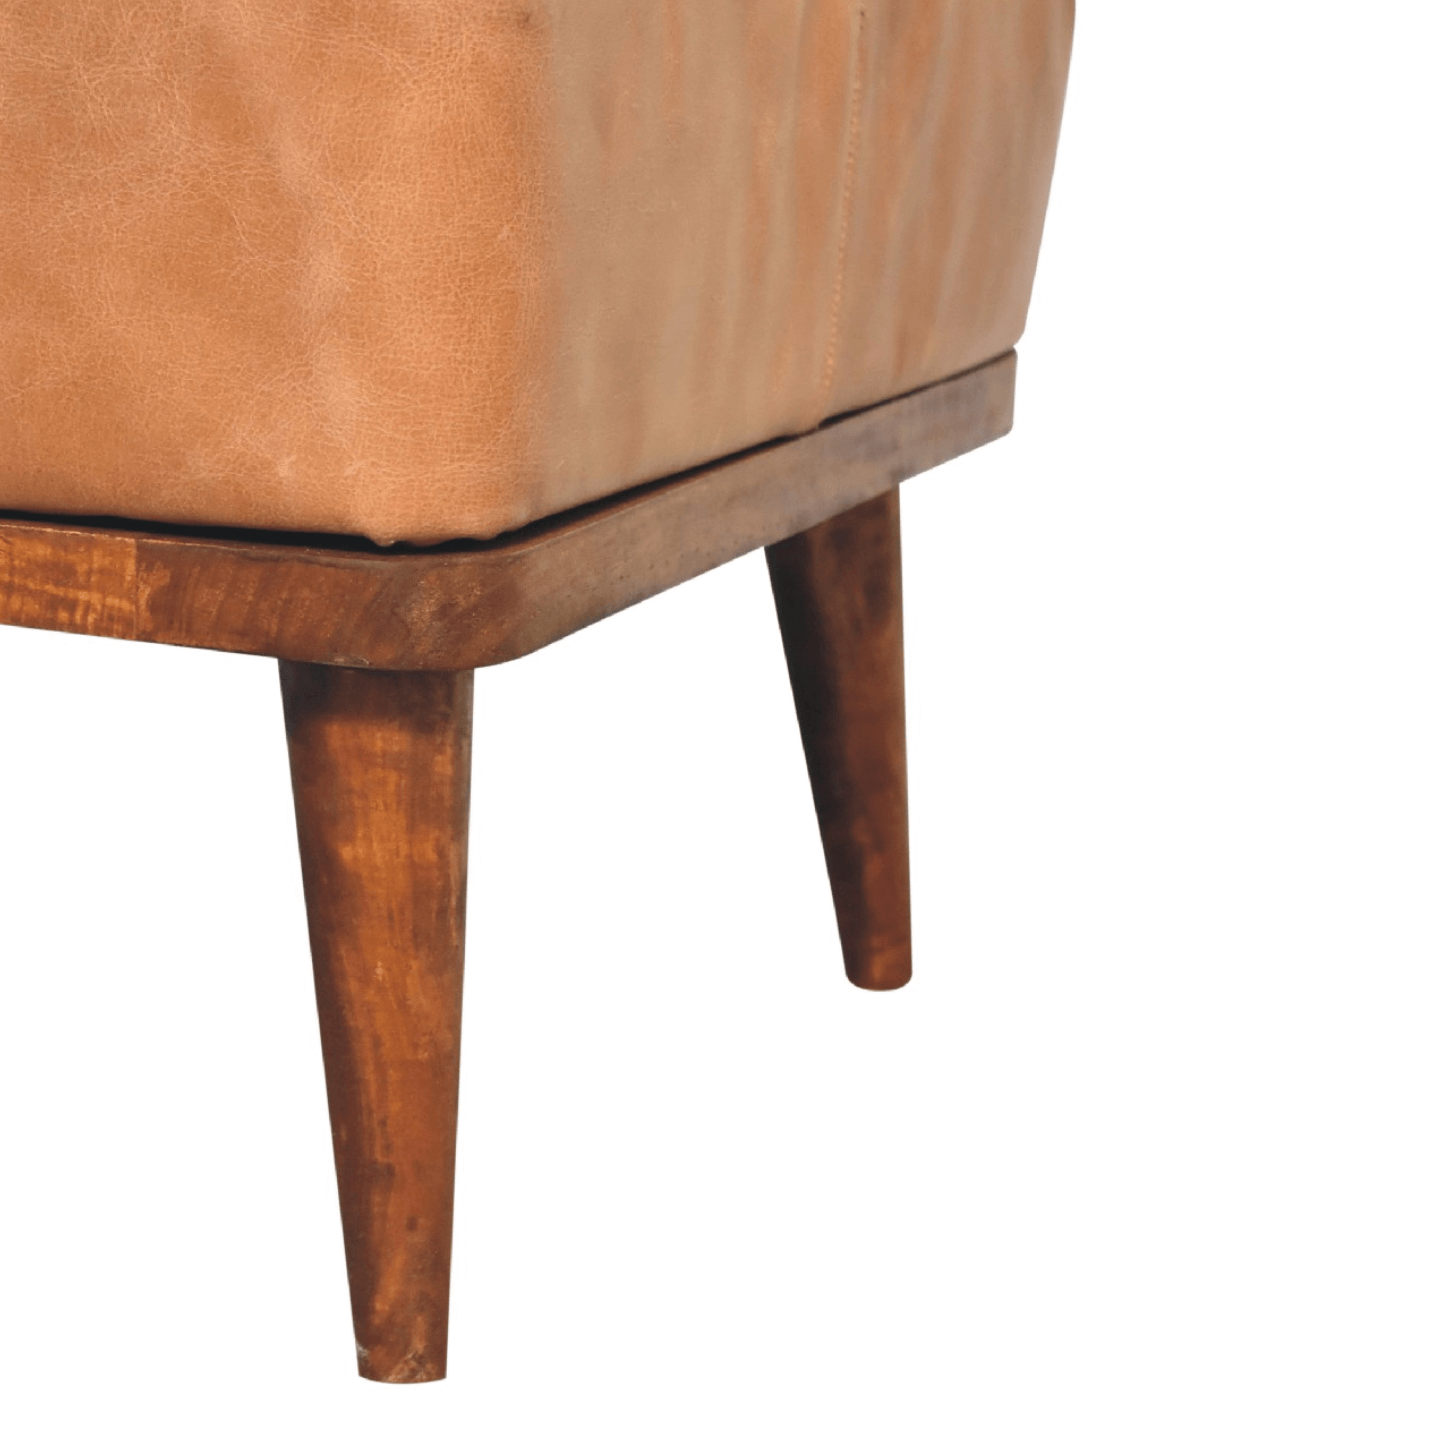 MCM Styled Genuine Buffalo Leather Ottoman Footstool, Tan 20" - Revel Sofa 